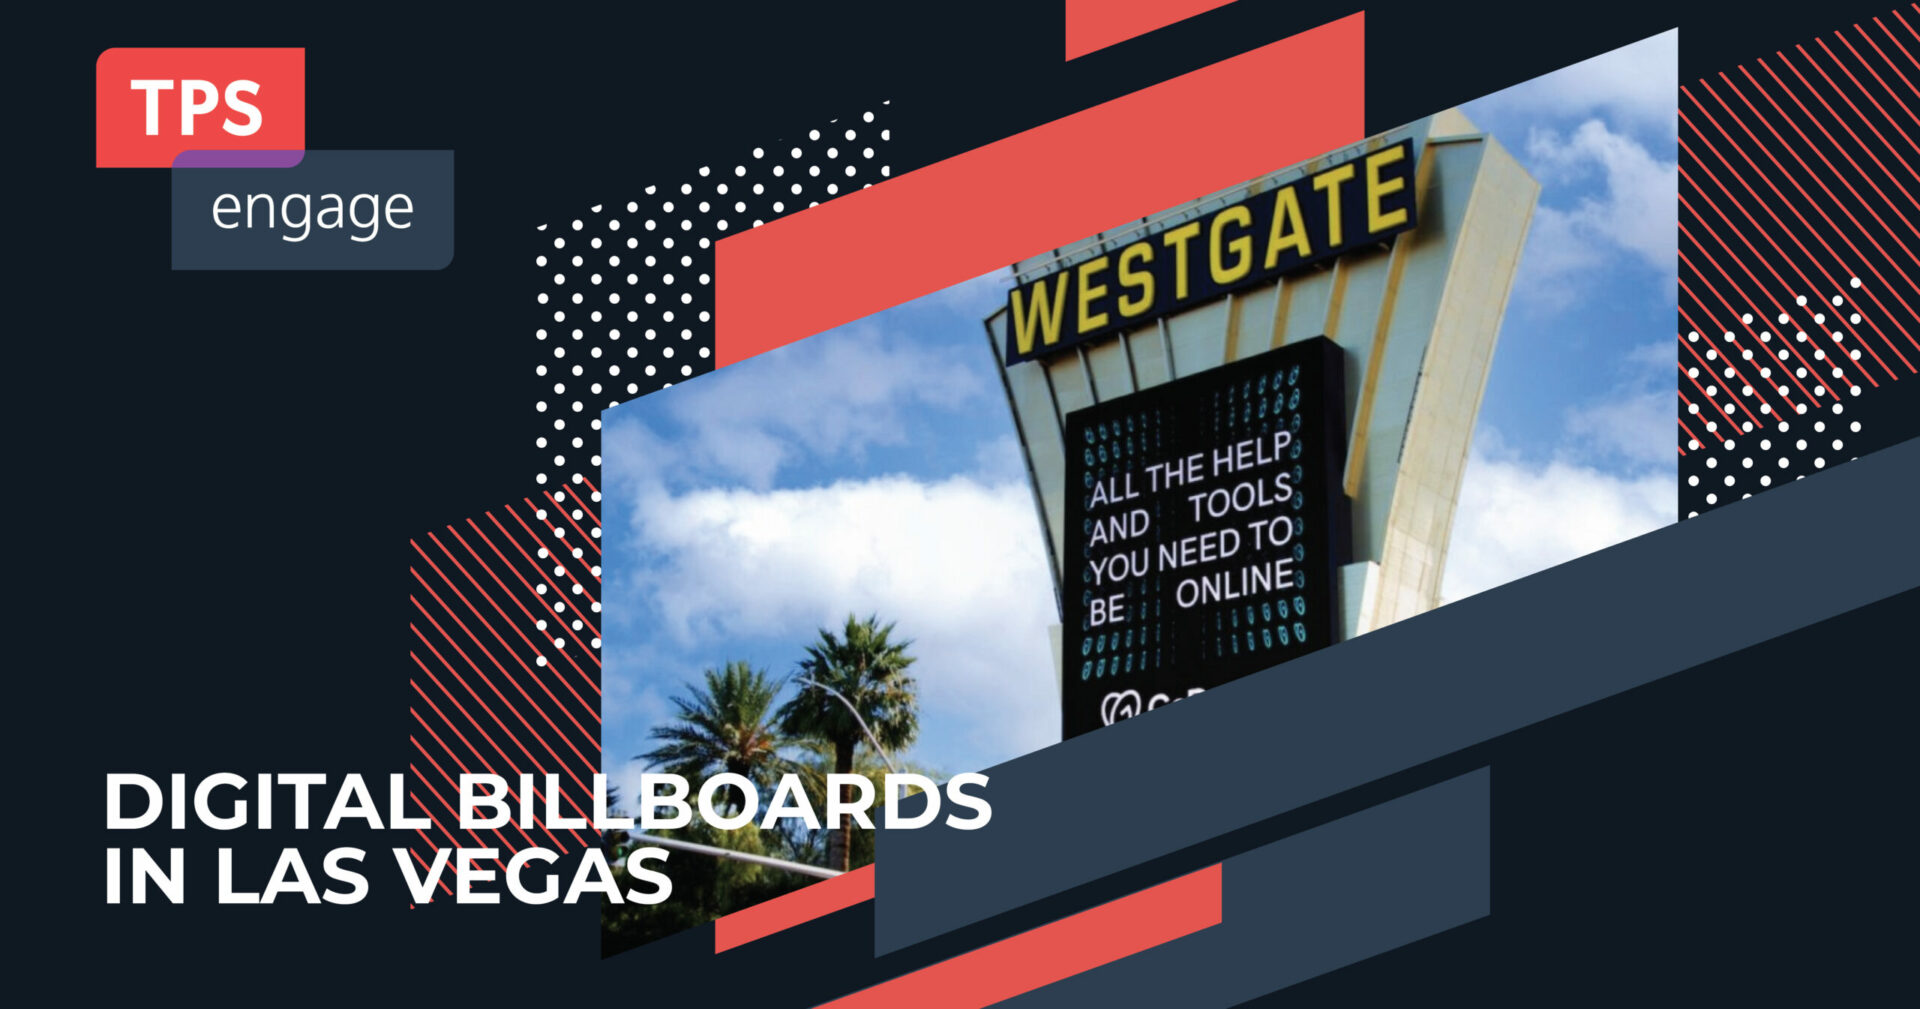 Digital billboards in Las Vegas cover